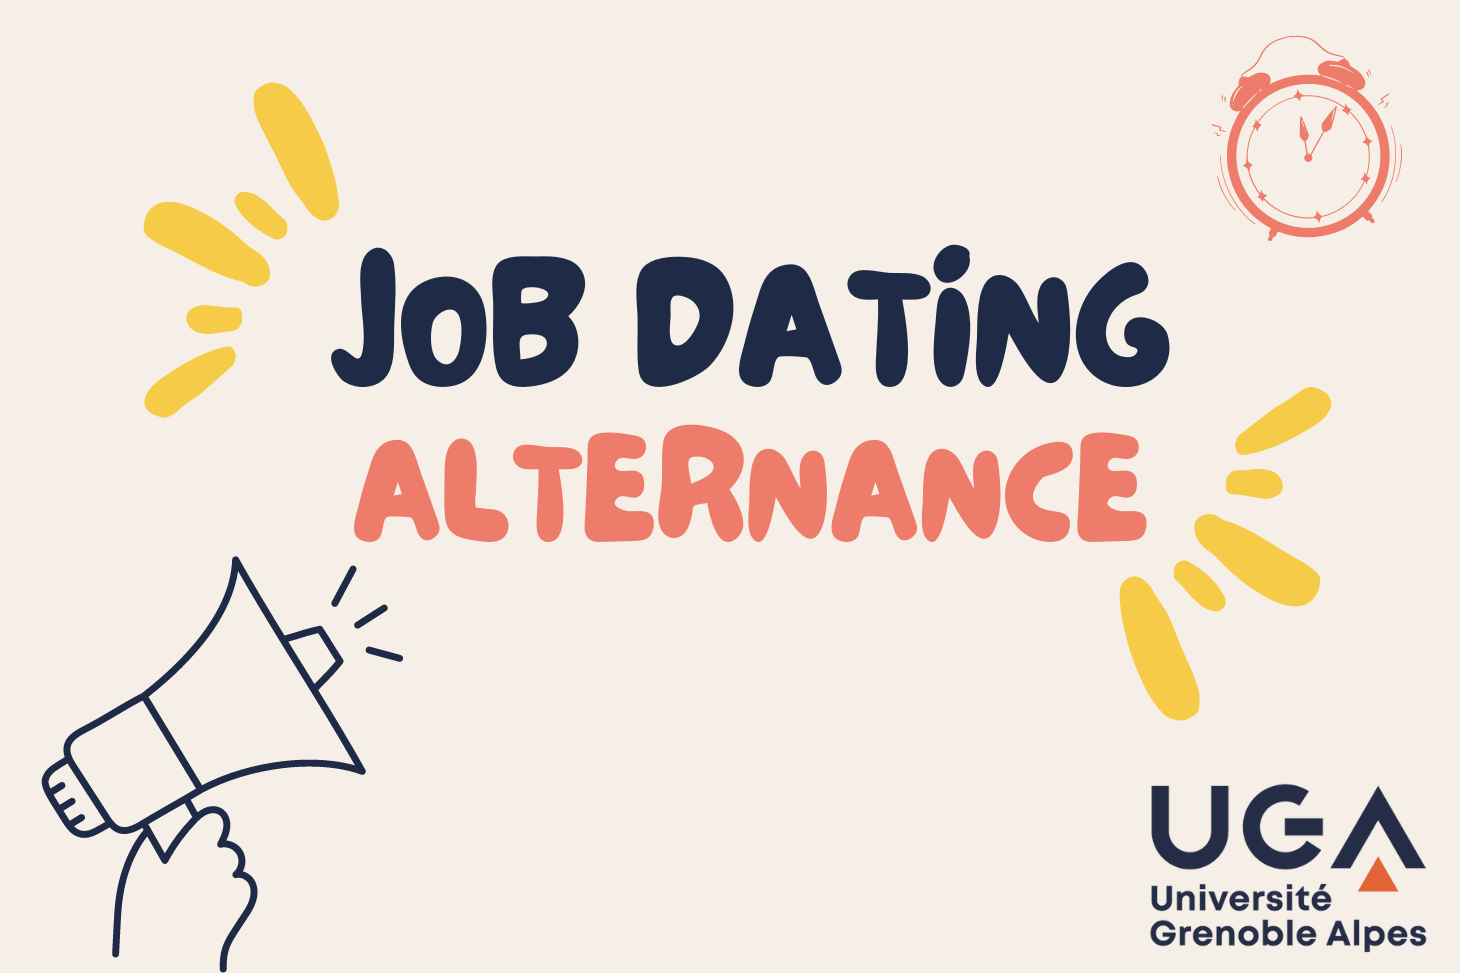 Job dating alternance